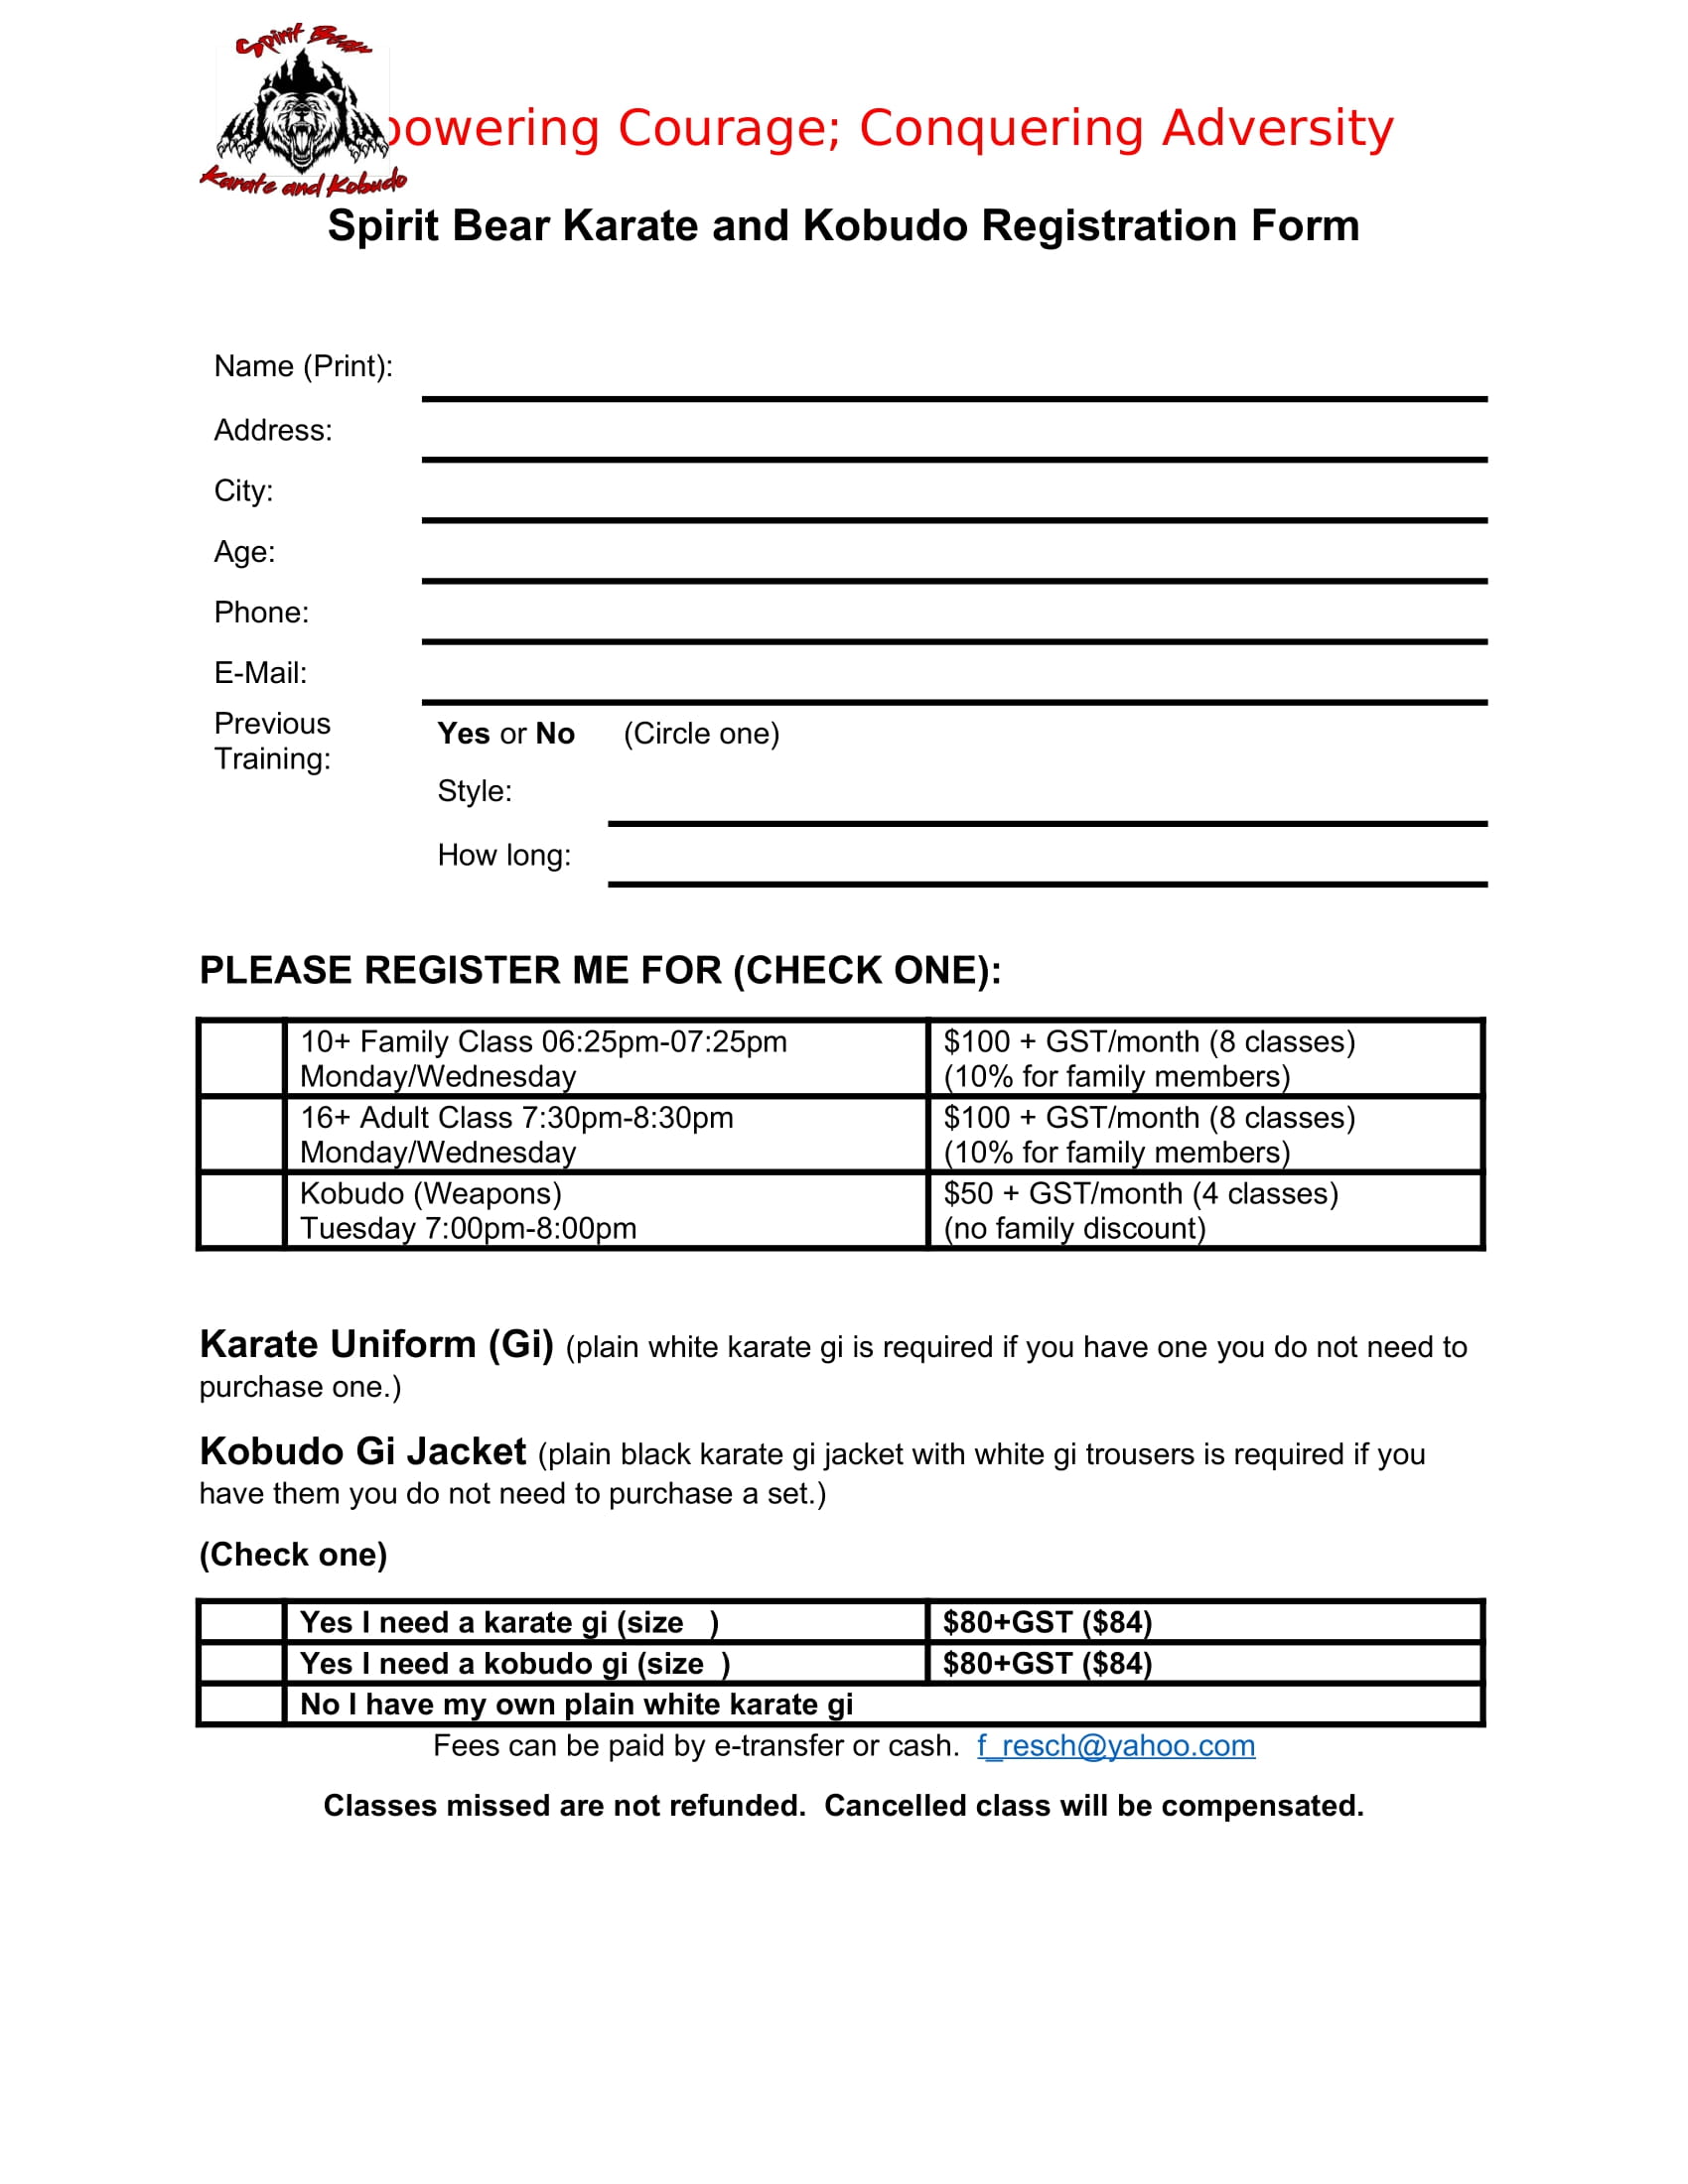 Spirit Bear Karate and Kobudo Registration Form